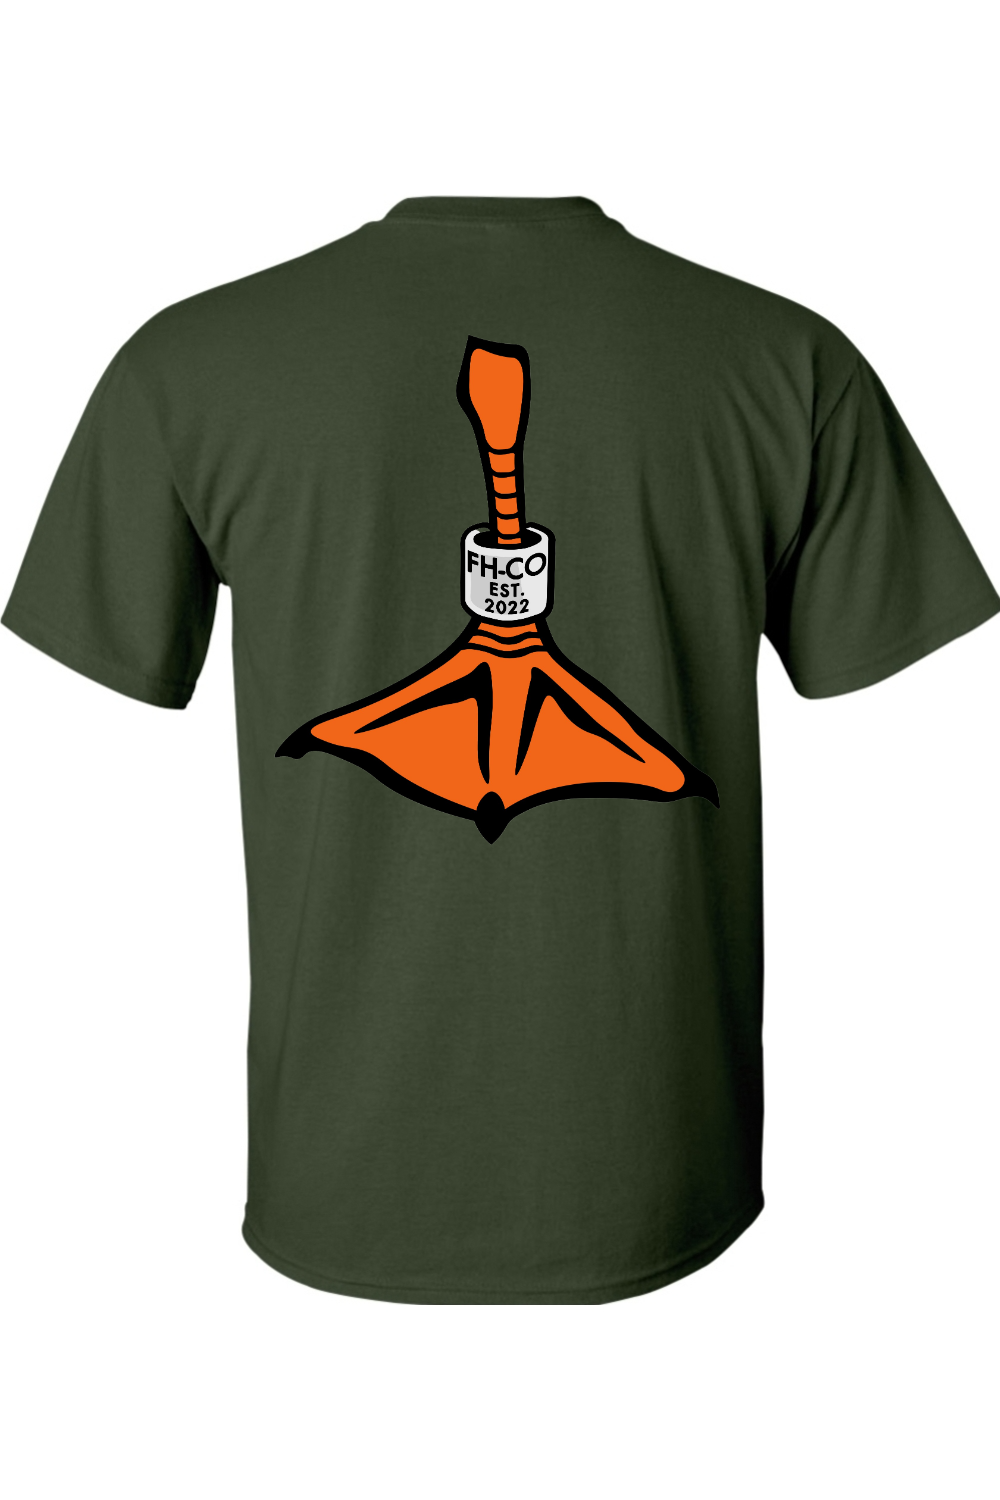 Duck Leg Band T-Shirt - Fowl Habit Co.